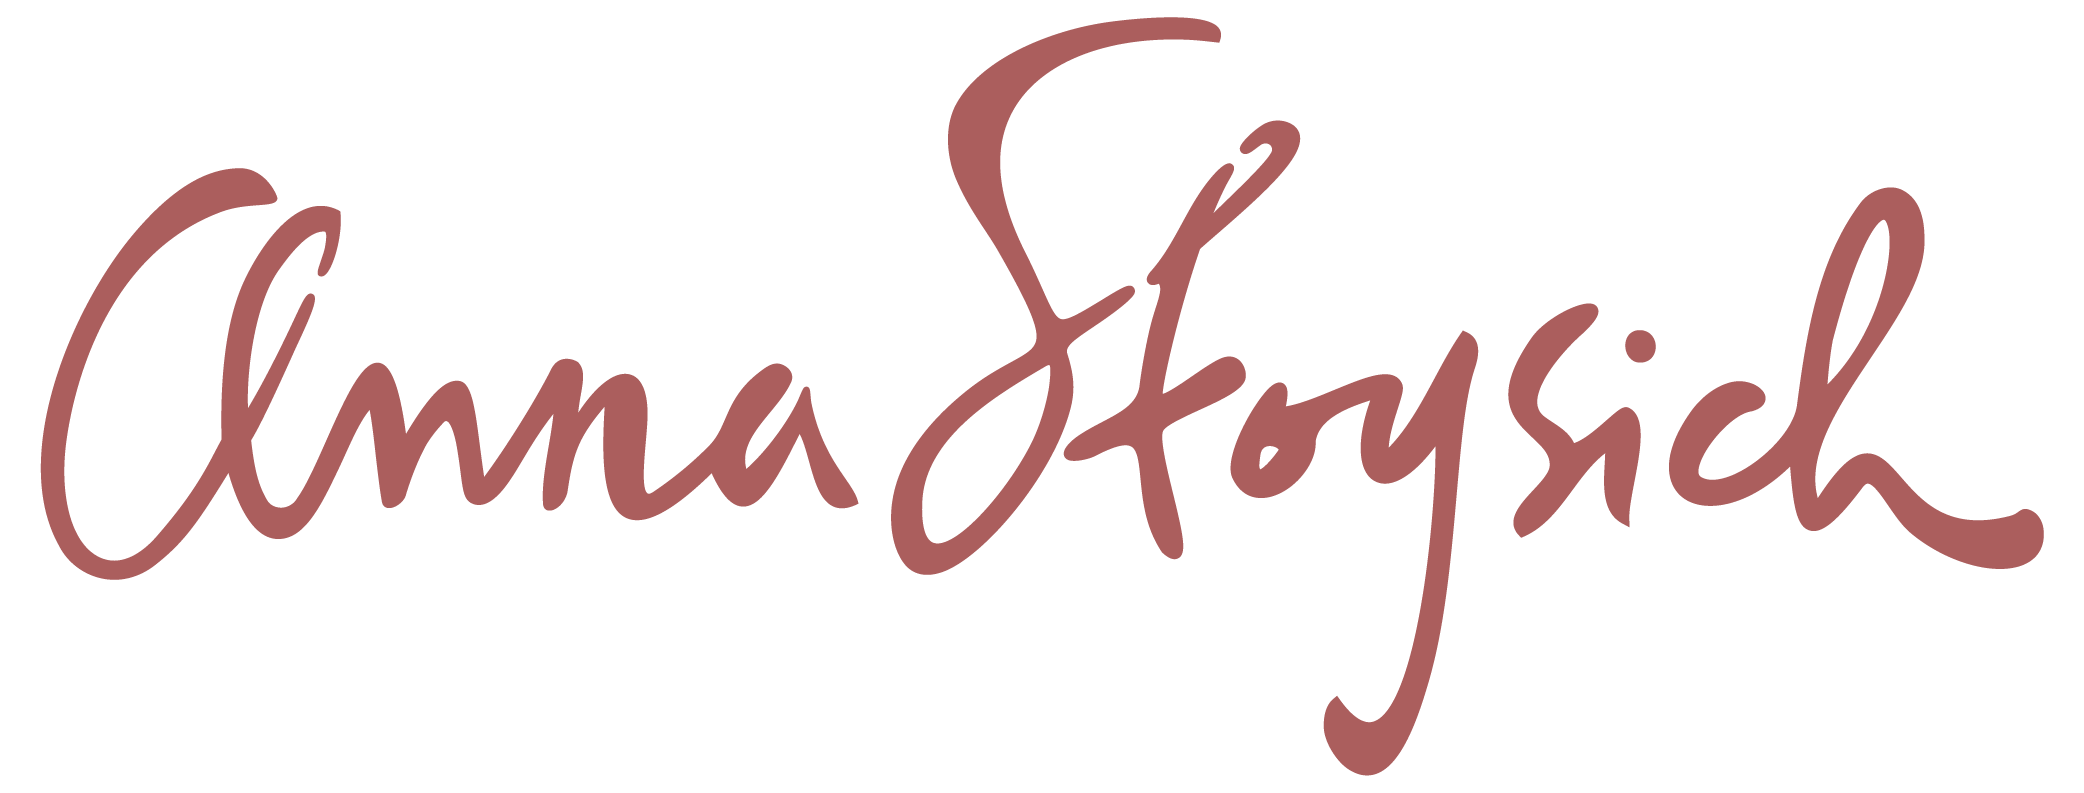 Anna Stoysich logo with handwritten feel